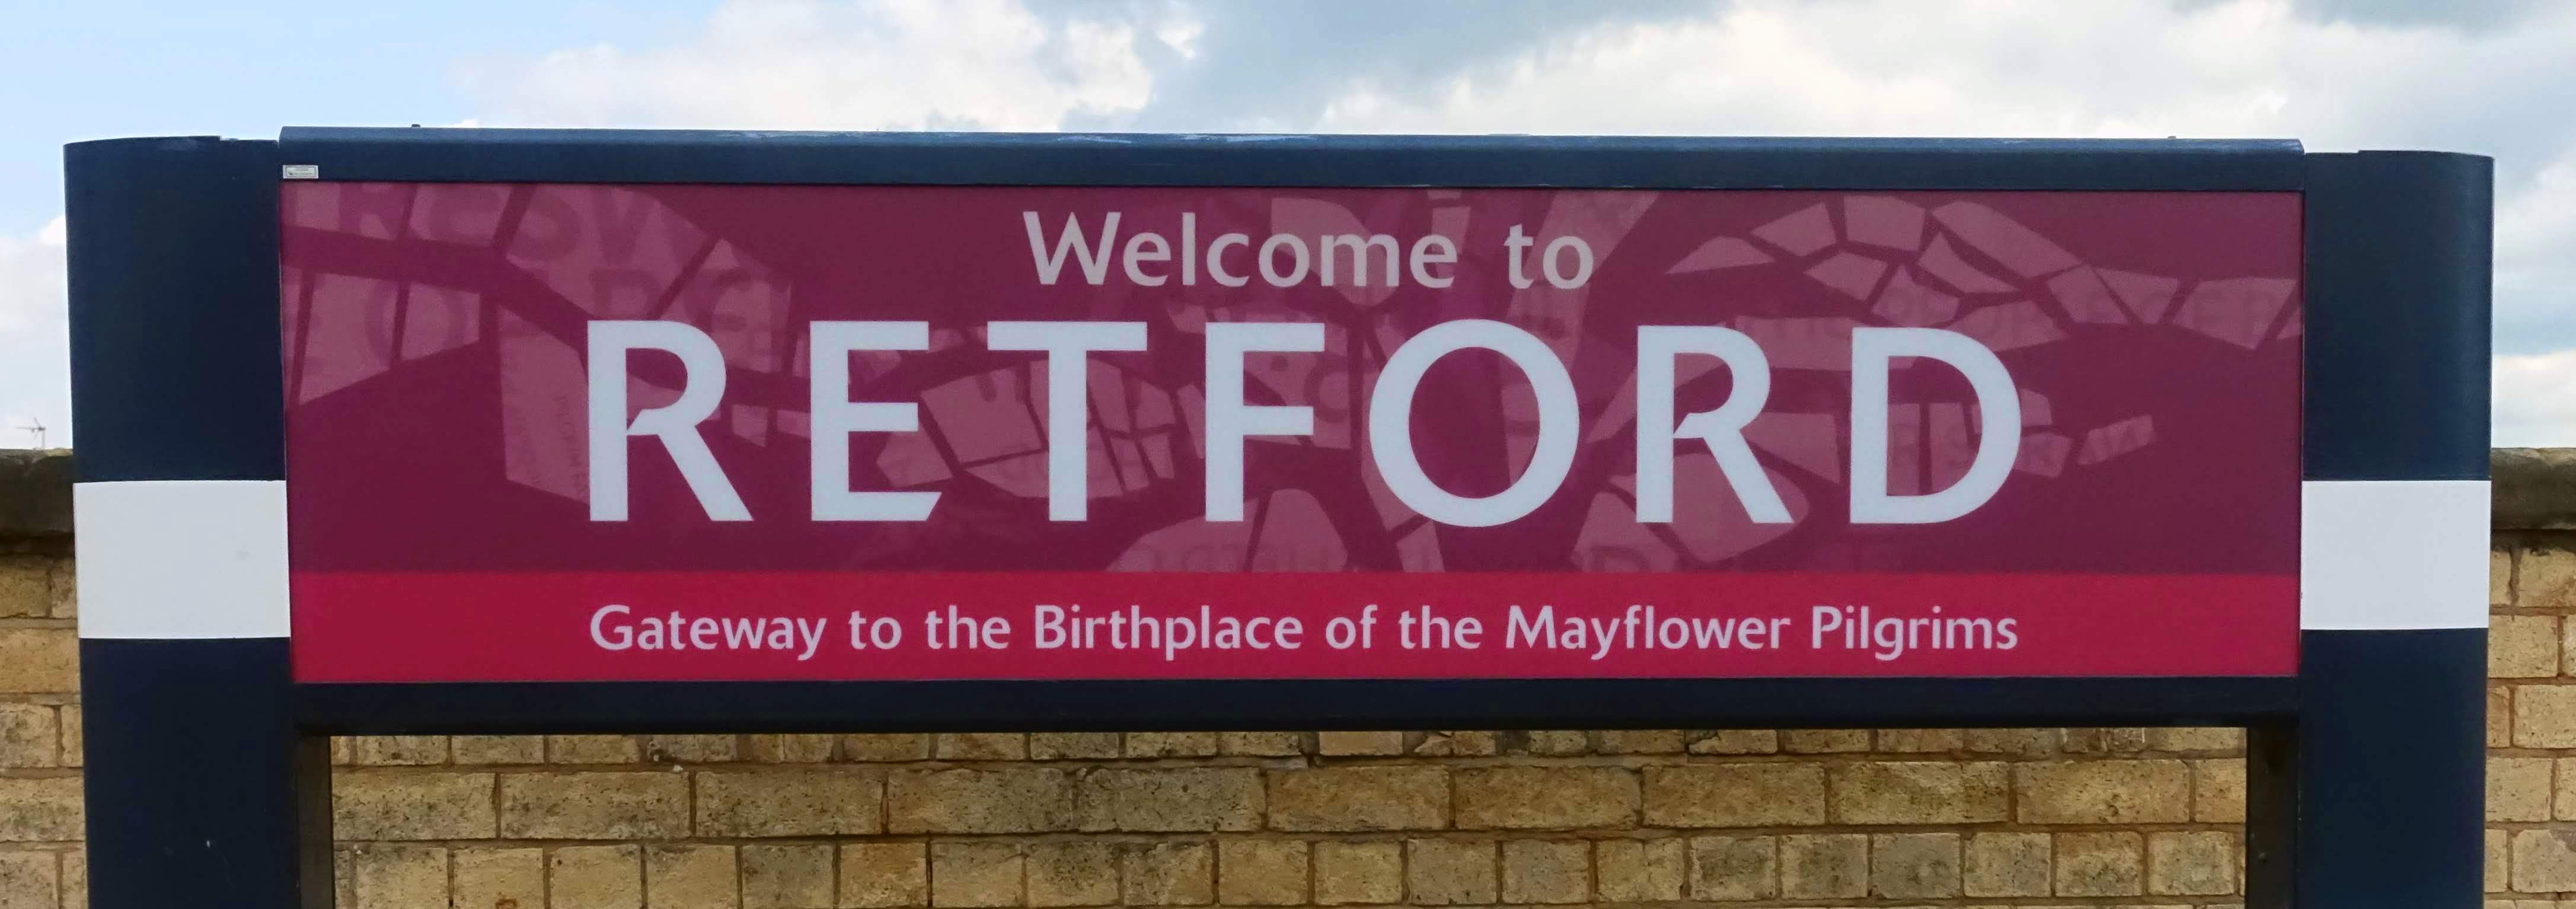 Retford gateway  to the Mayflower pilgrims